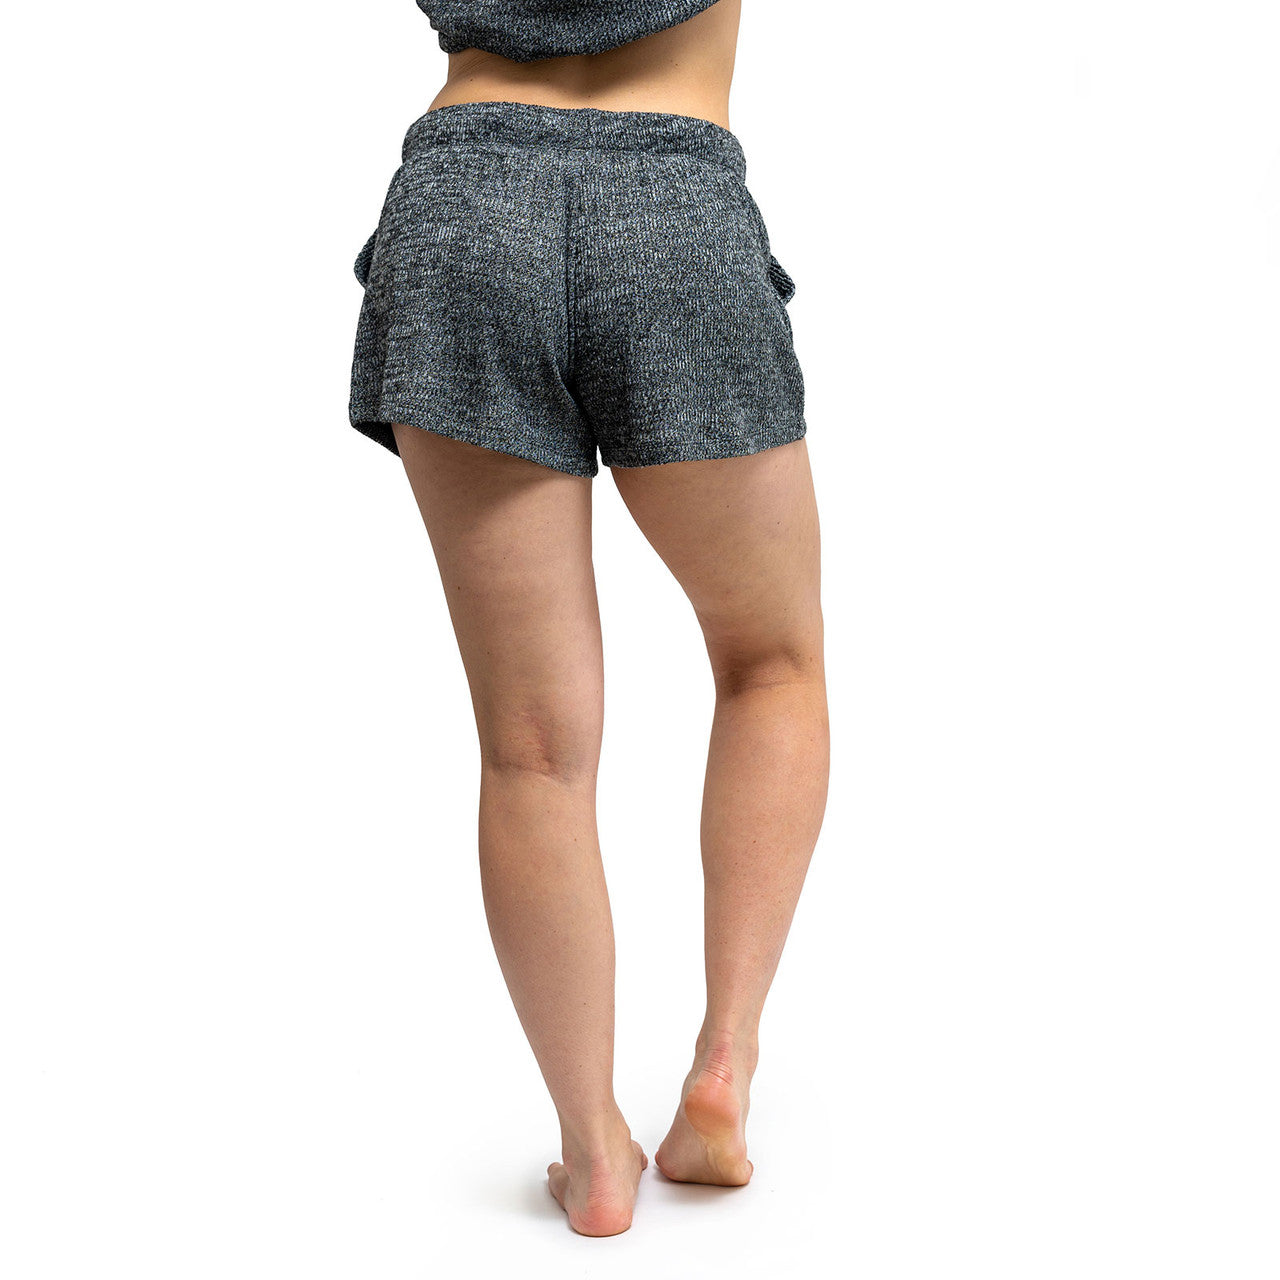 Cuddleblend Shorts - FINAL SALE